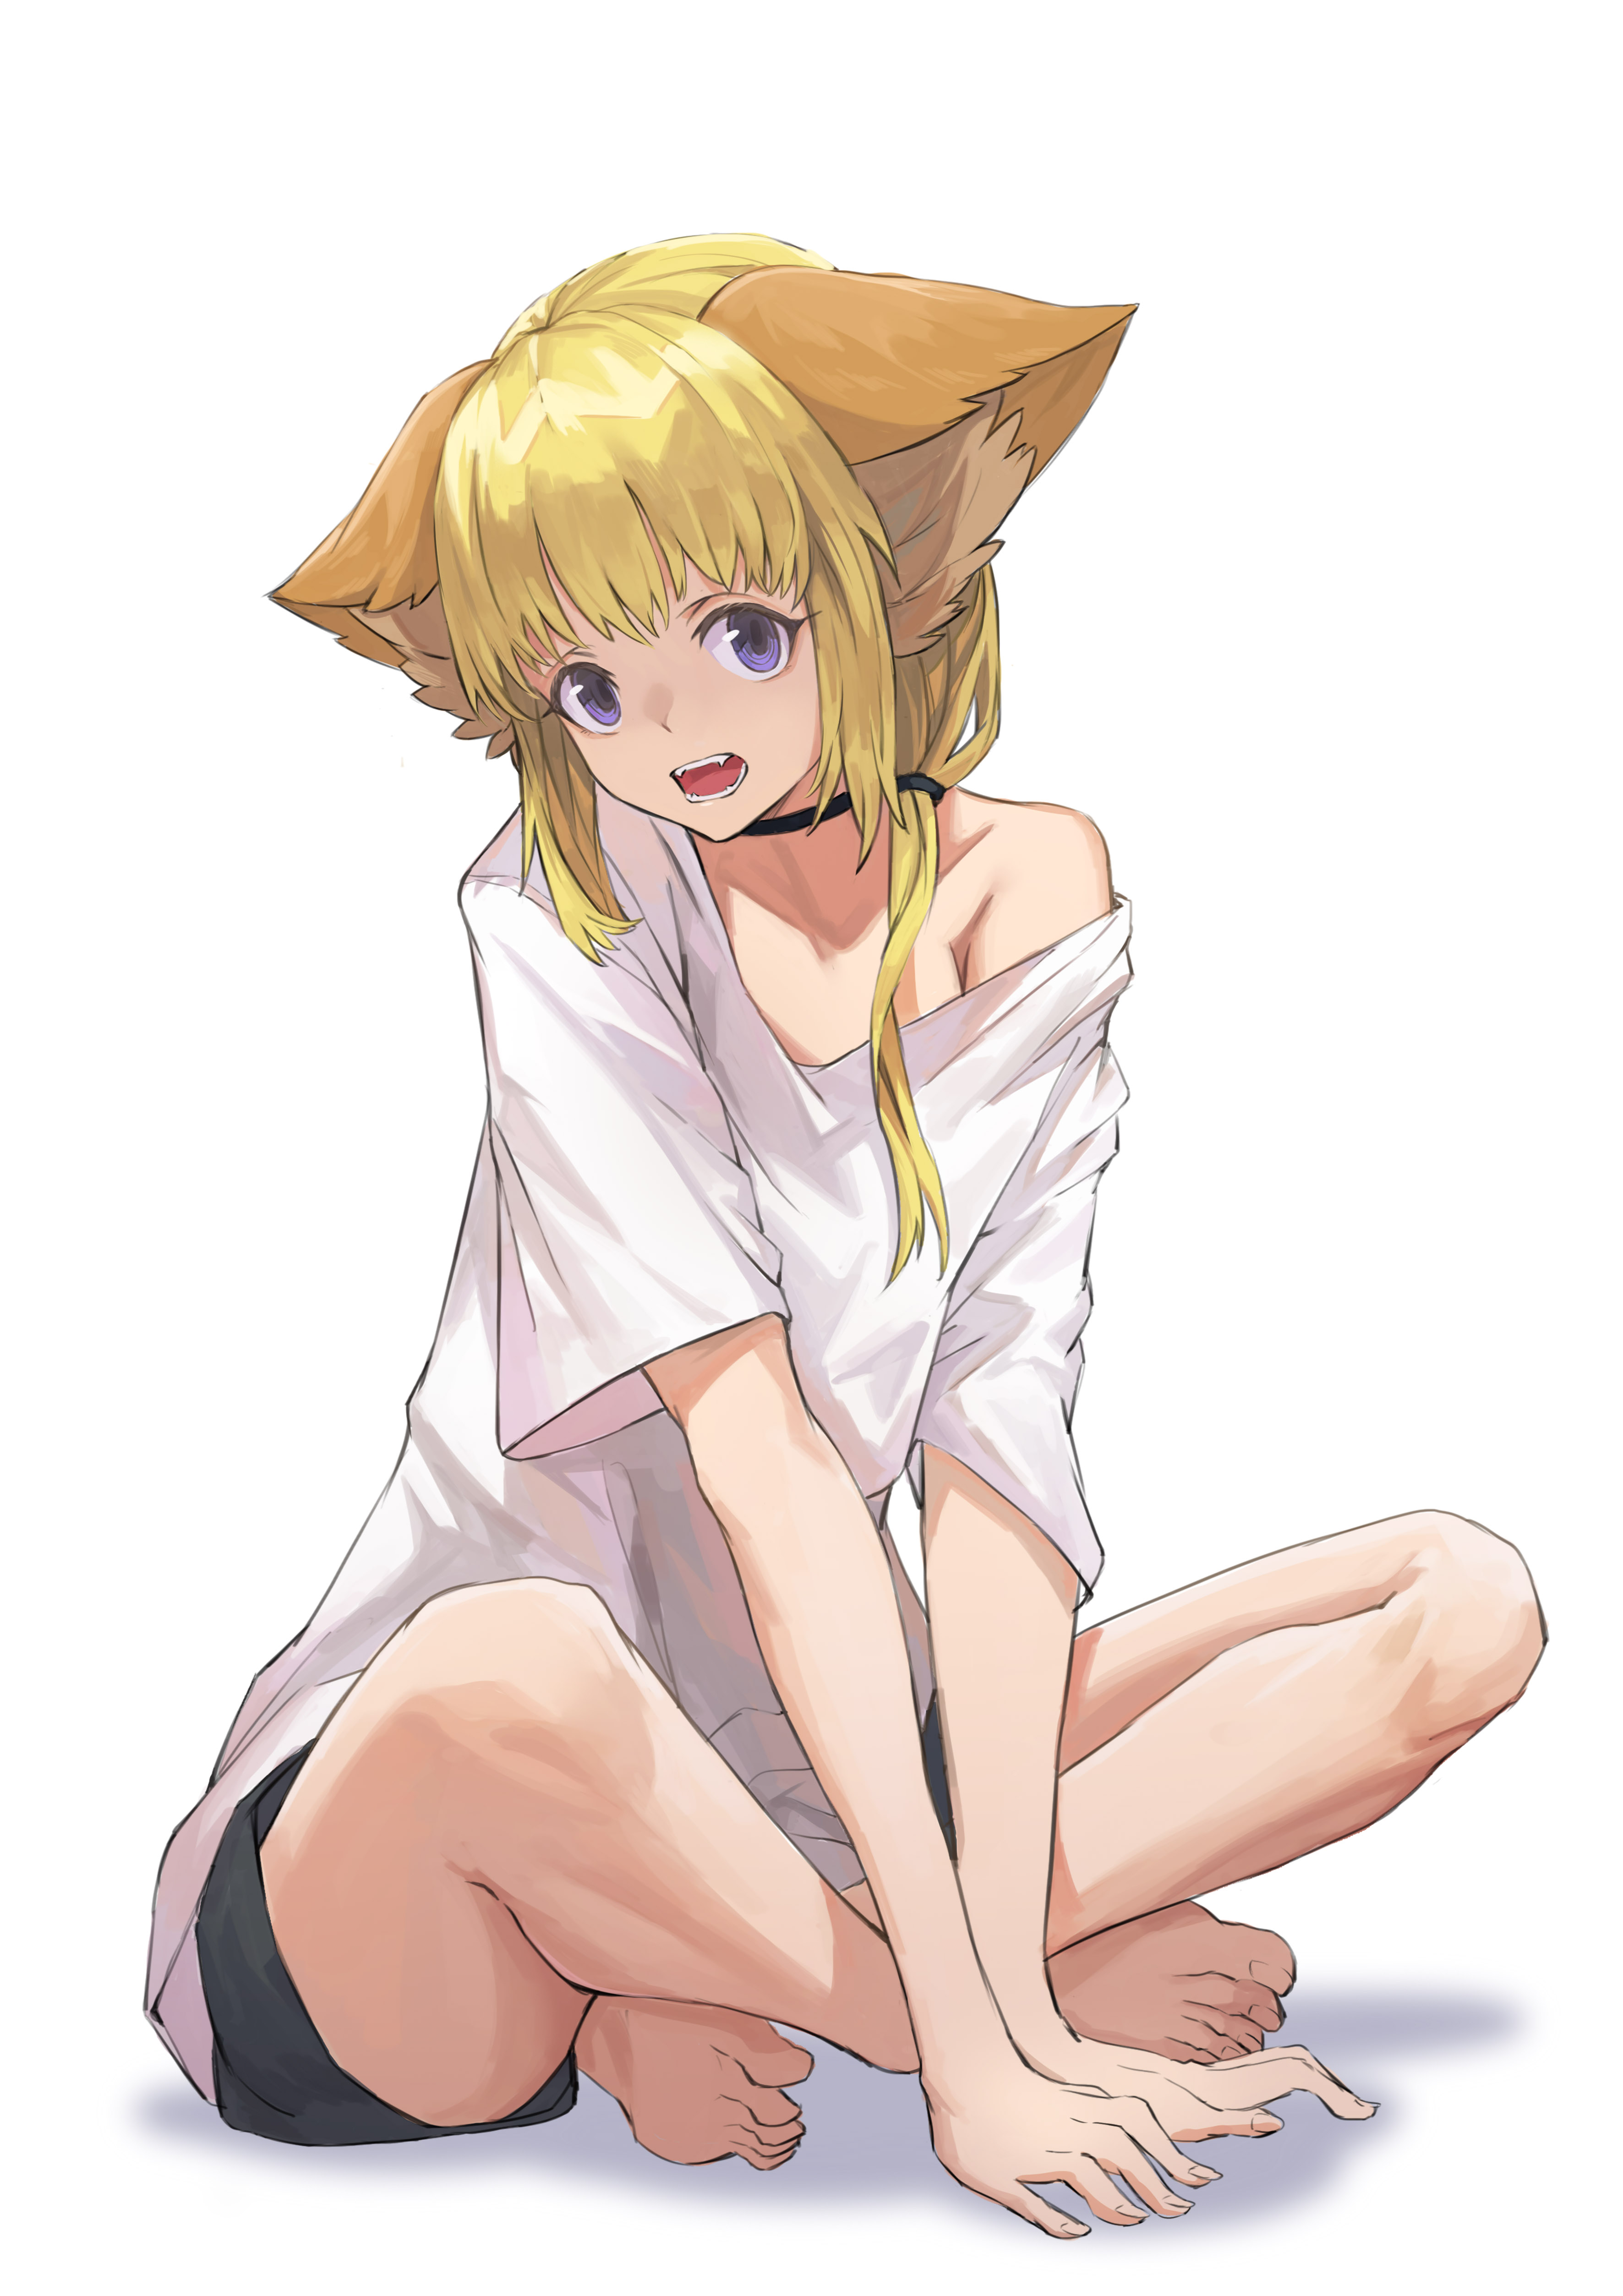 Anime 3543x5012 Kemono Jihen fox girl white t-shirt small boobs thighs barefoot blue eyes anime girls fangs looking at viewer choker Kon (Kemono Jihen) fan art anime Yorik